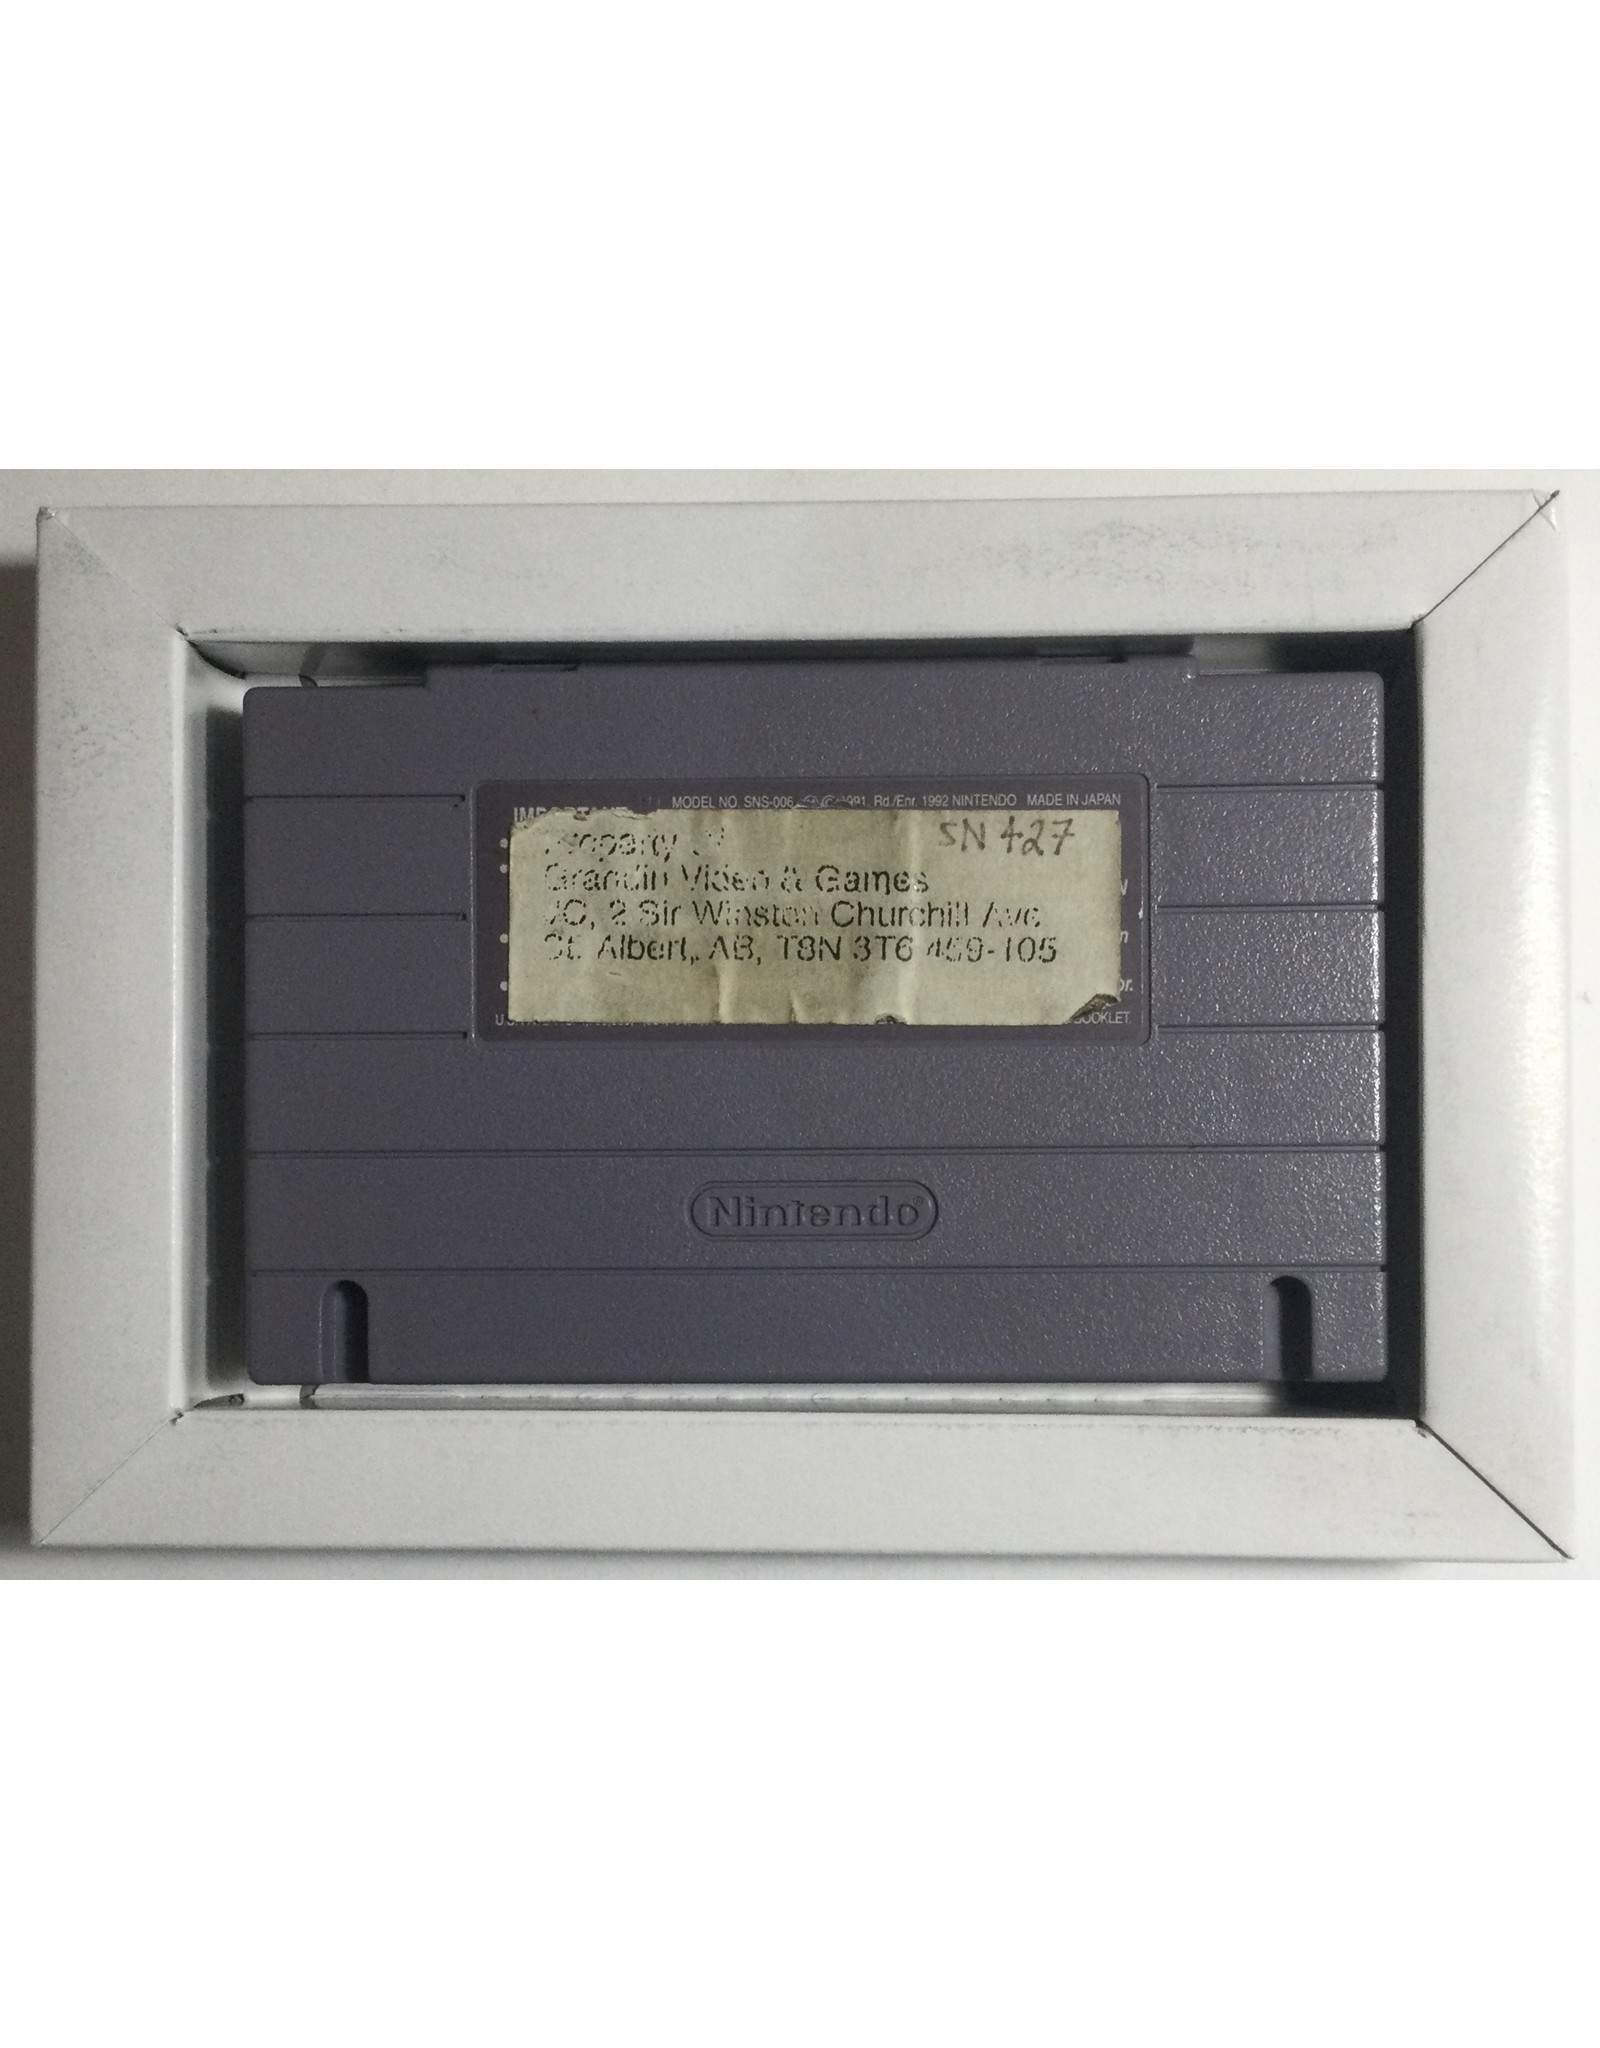 Nintendo Uniracers for Super Nintendo Entertainment System (SNES) - CIB